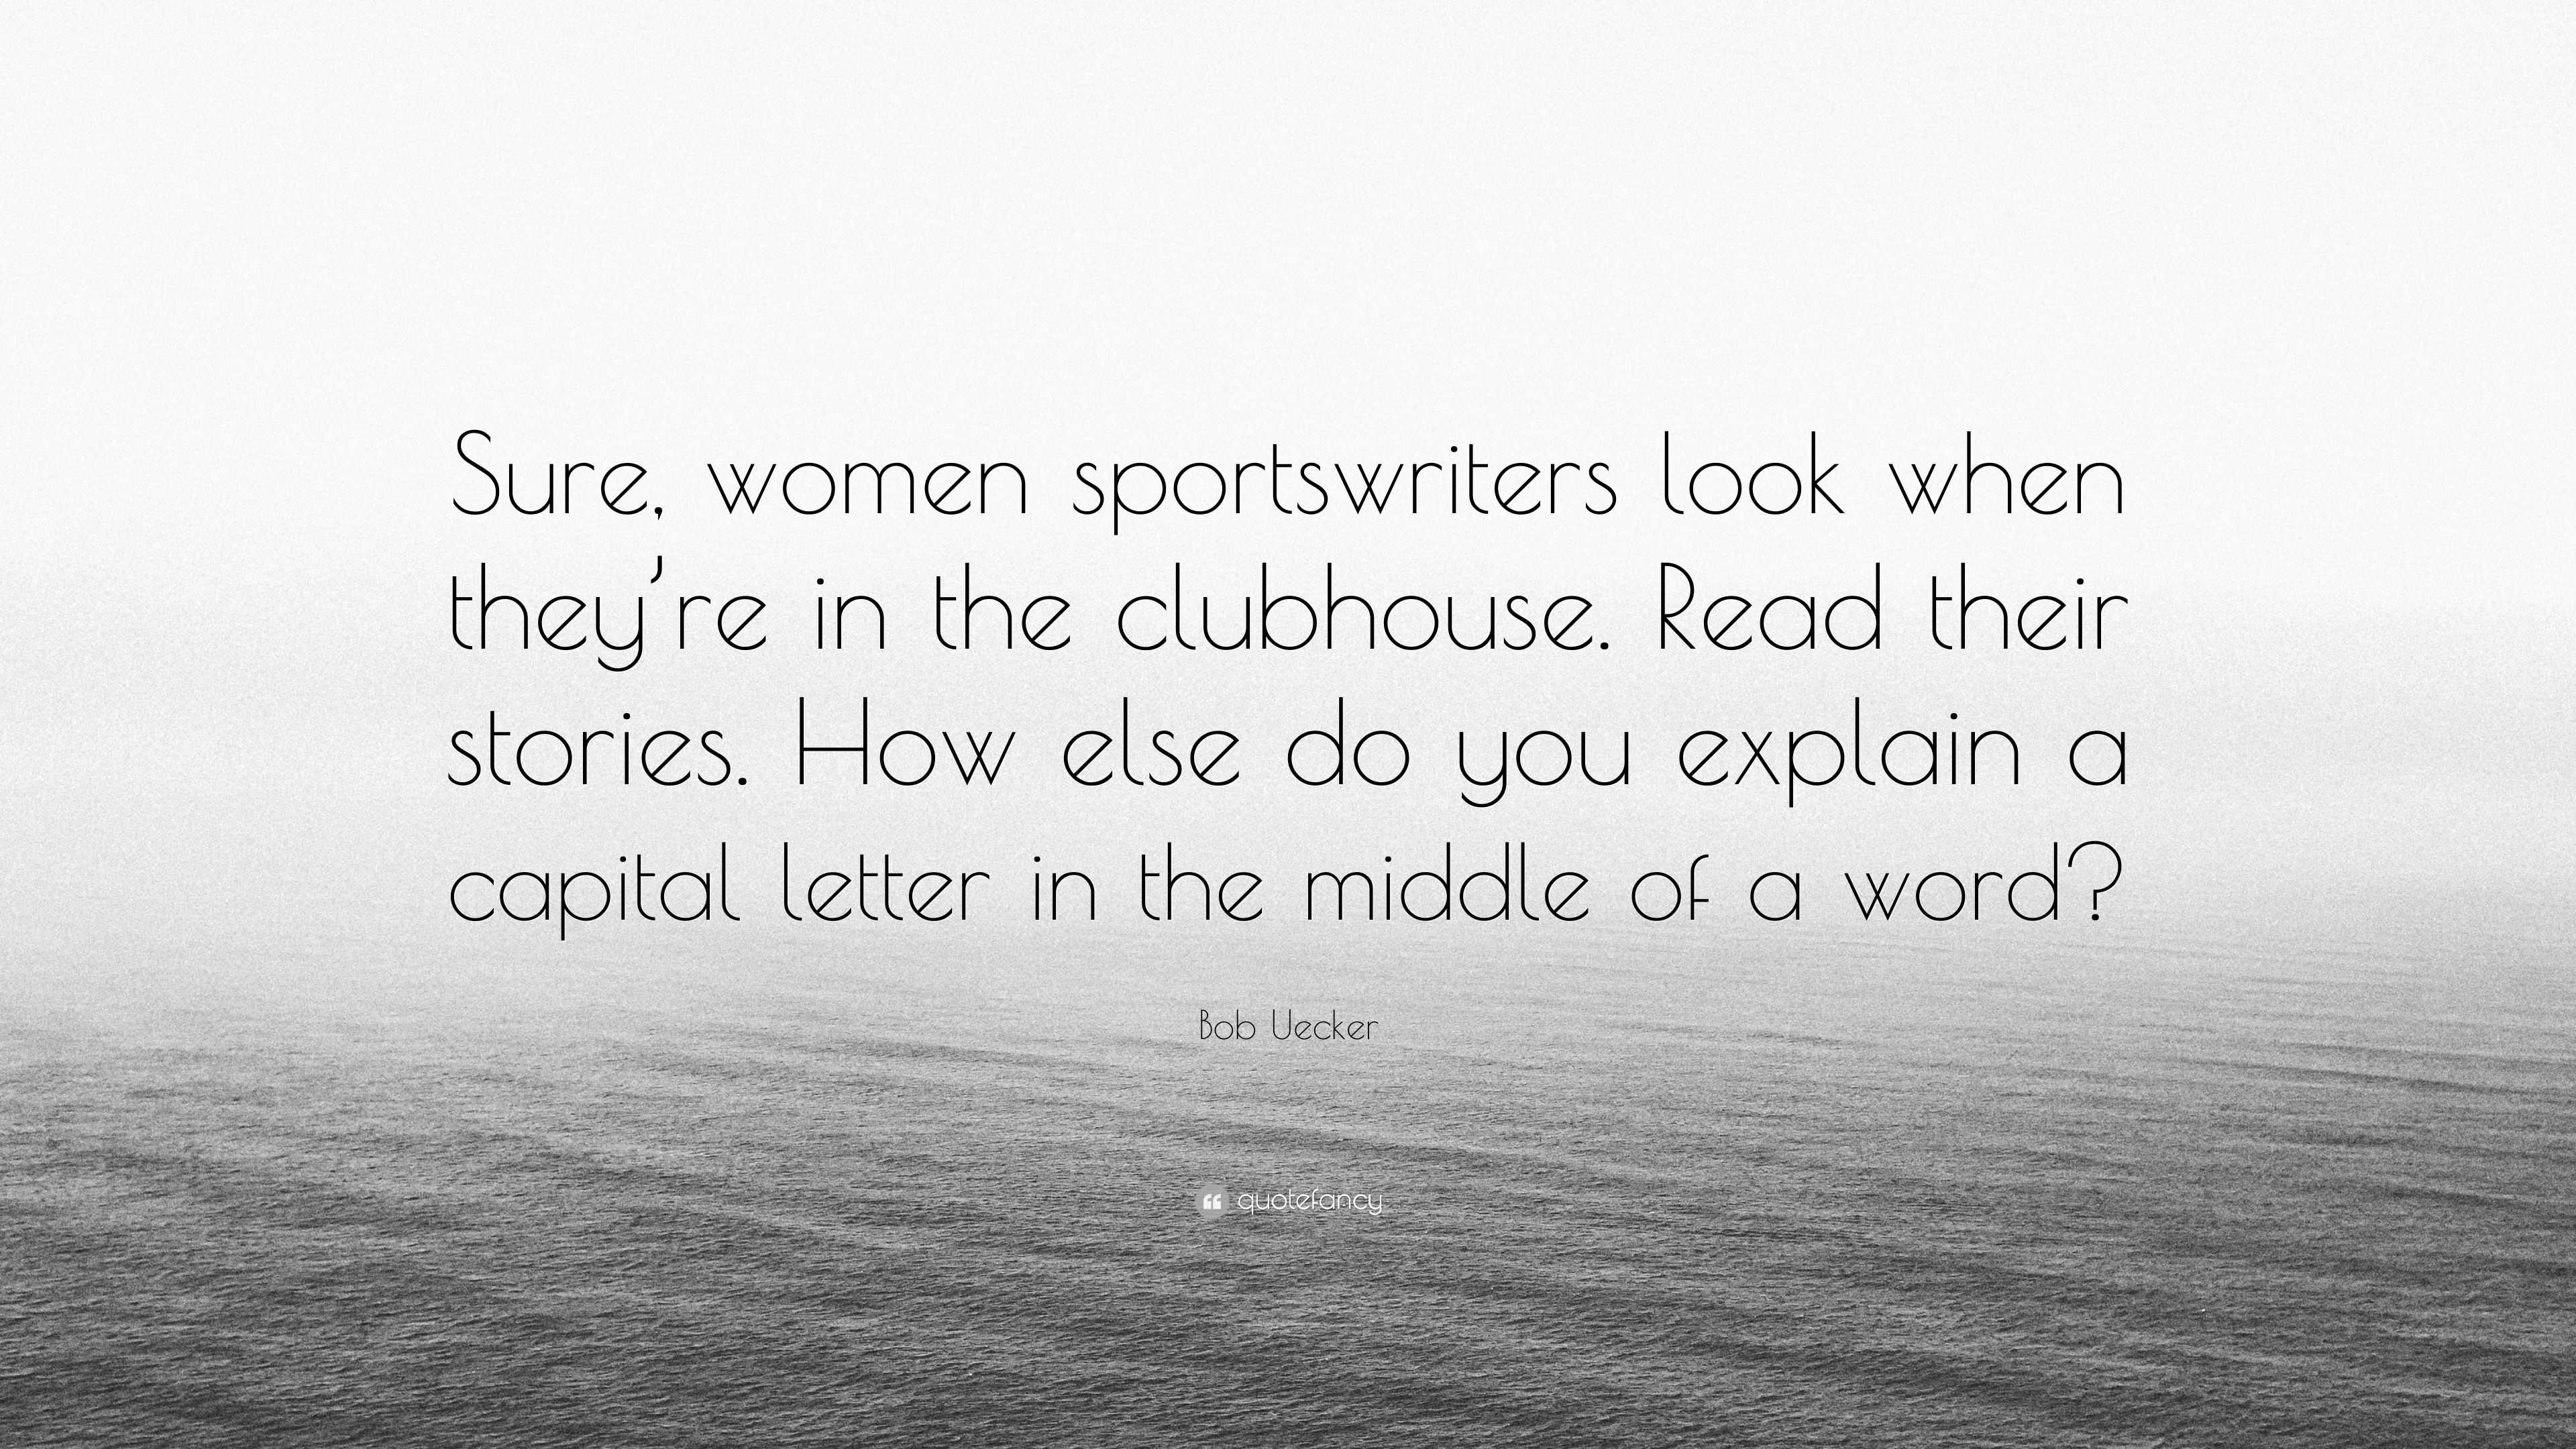 Bob Uecker - Sure, women sportswriters look when they're